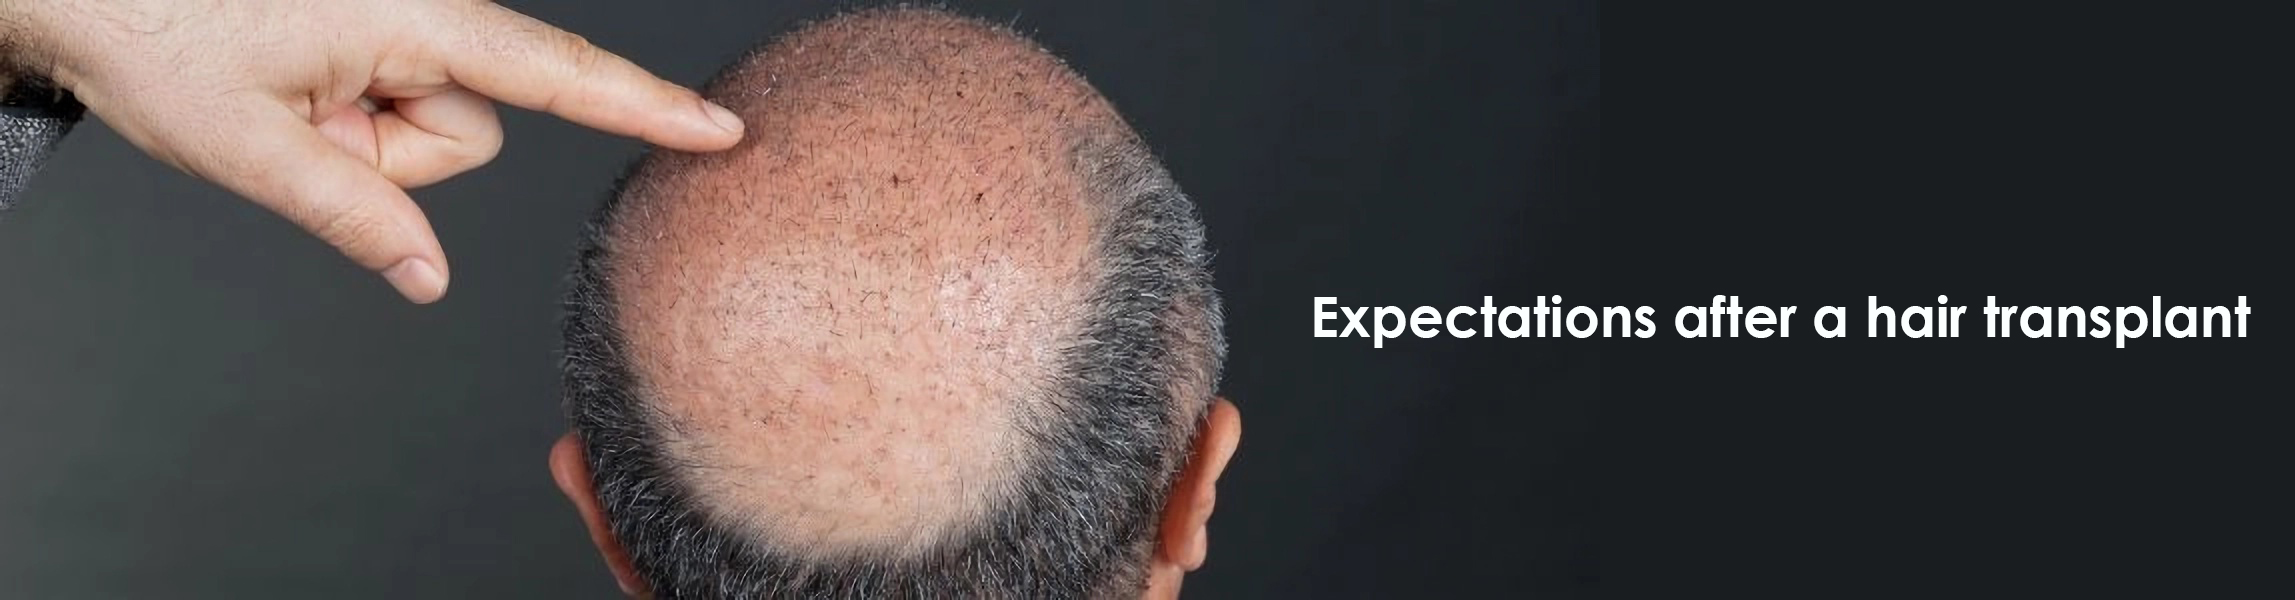 Expectations after hair transplantation